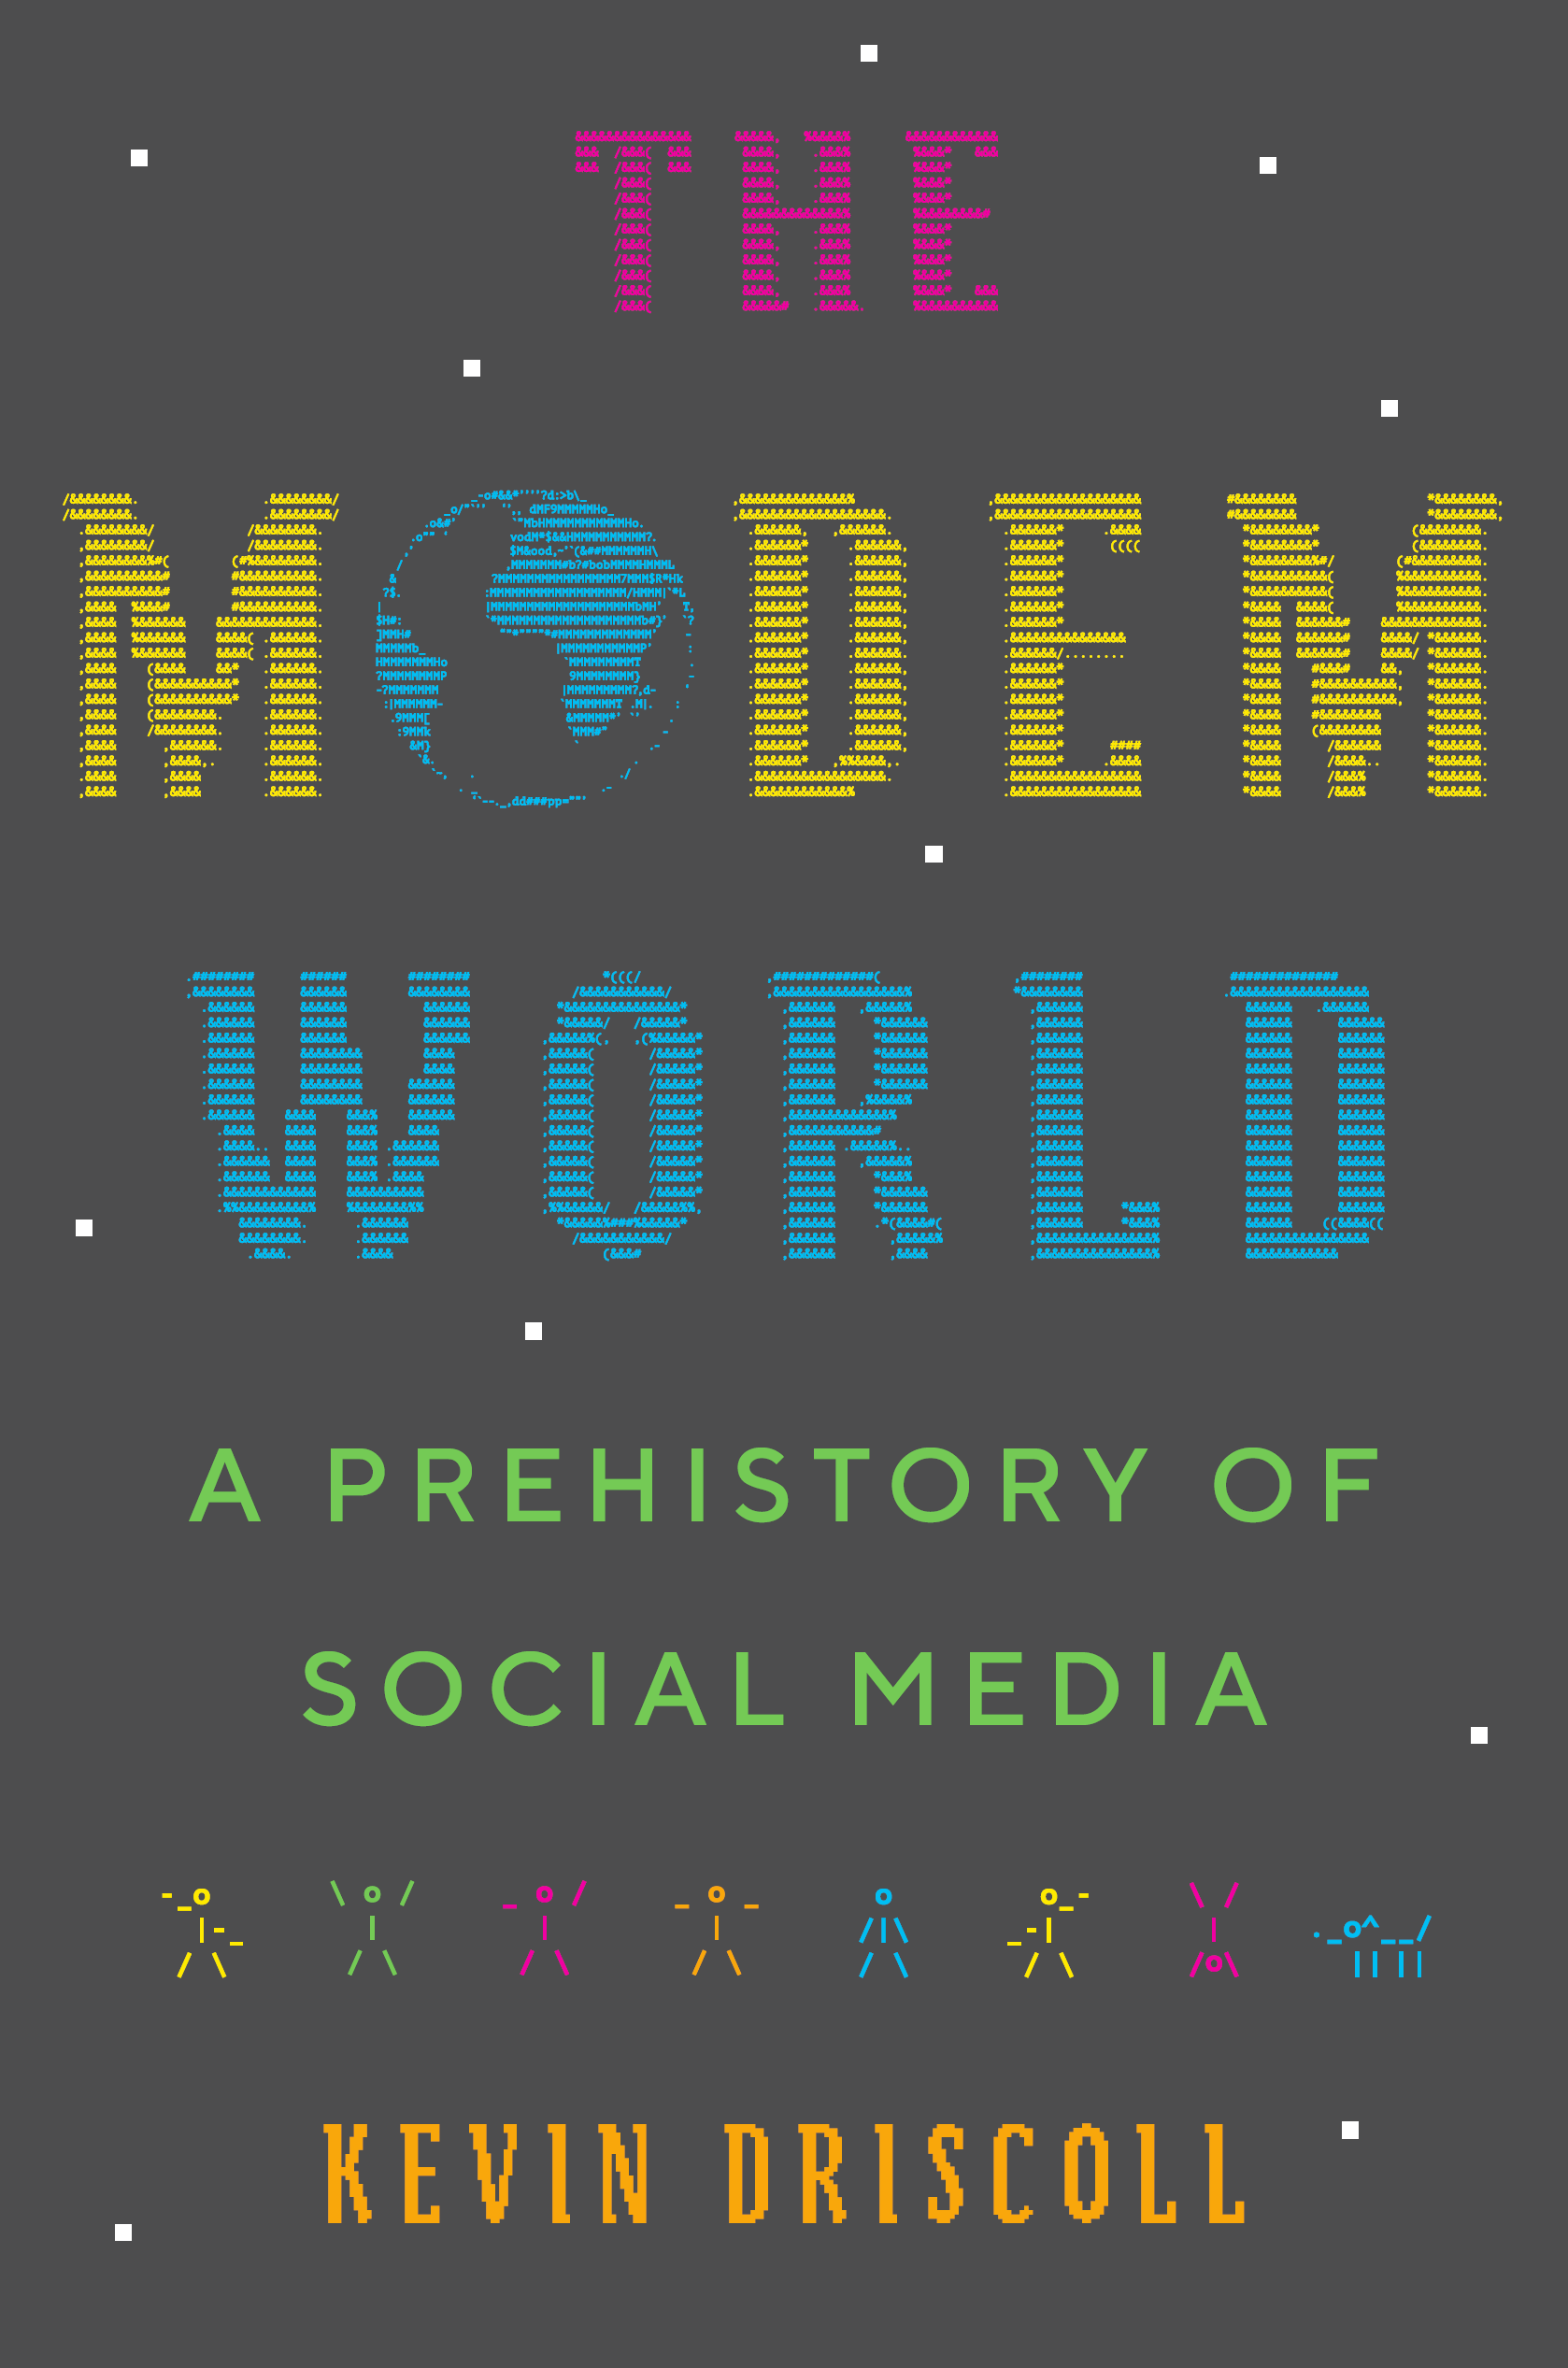 The Modem World: A Prehistory of Social Media book jacket